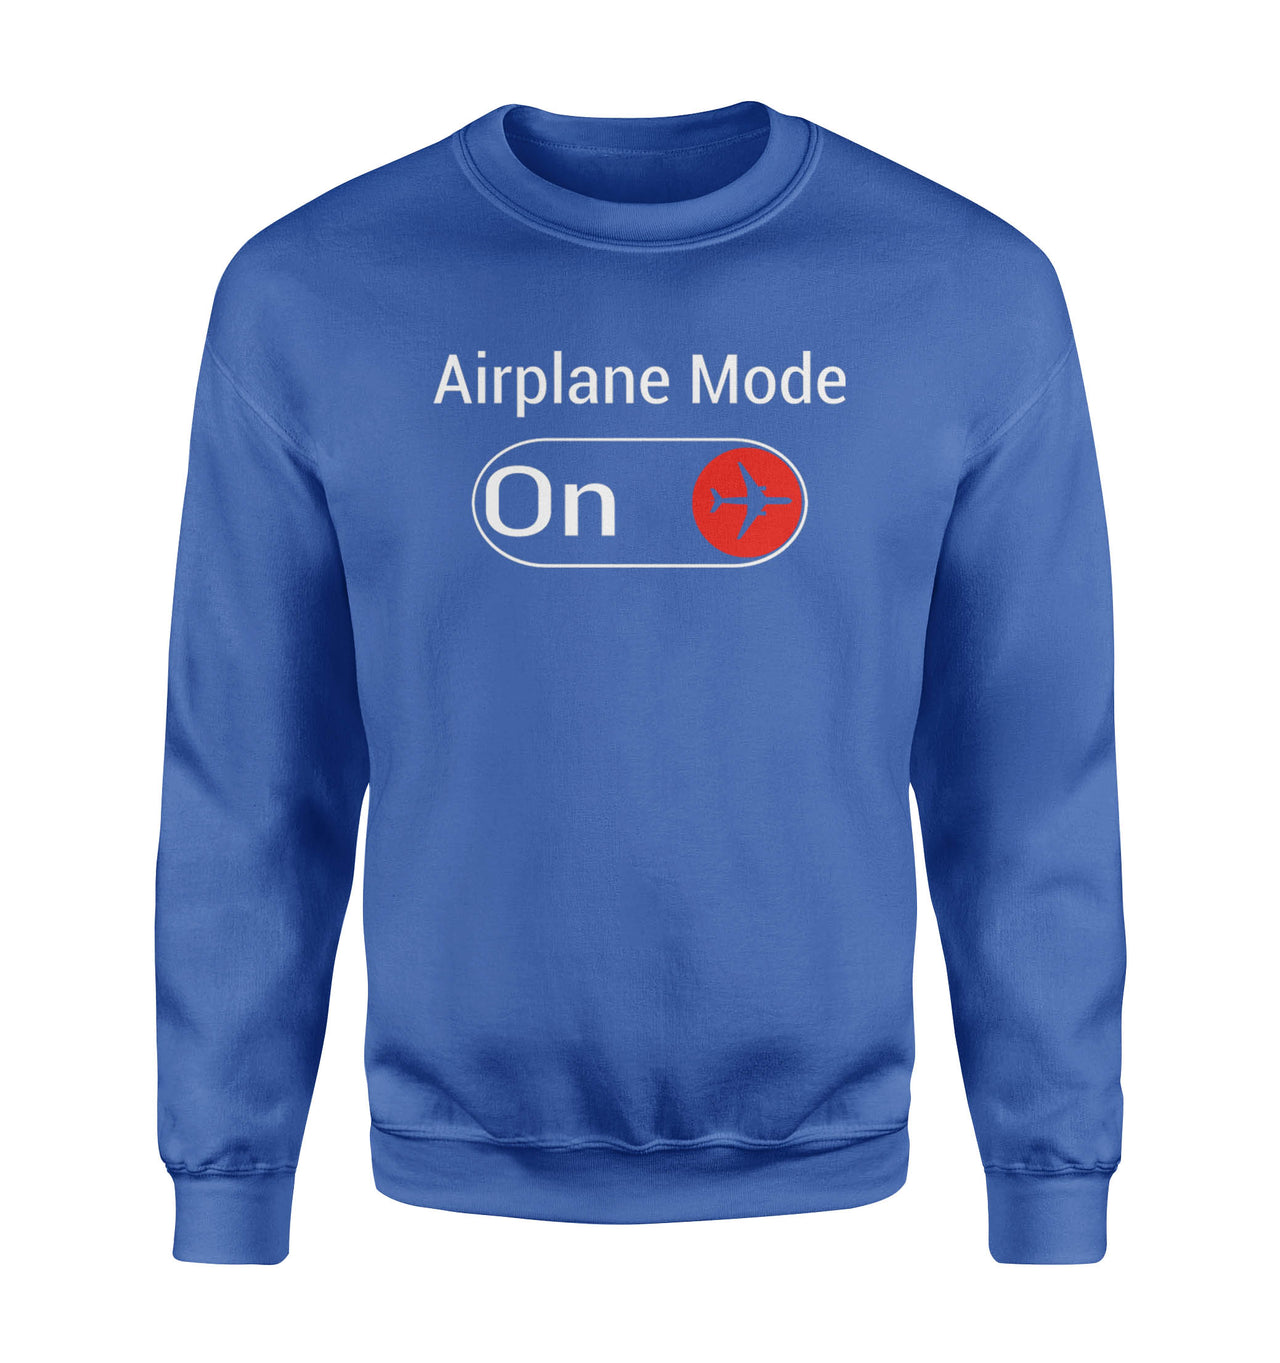 Airplane Mode On Designed Sweatshirts